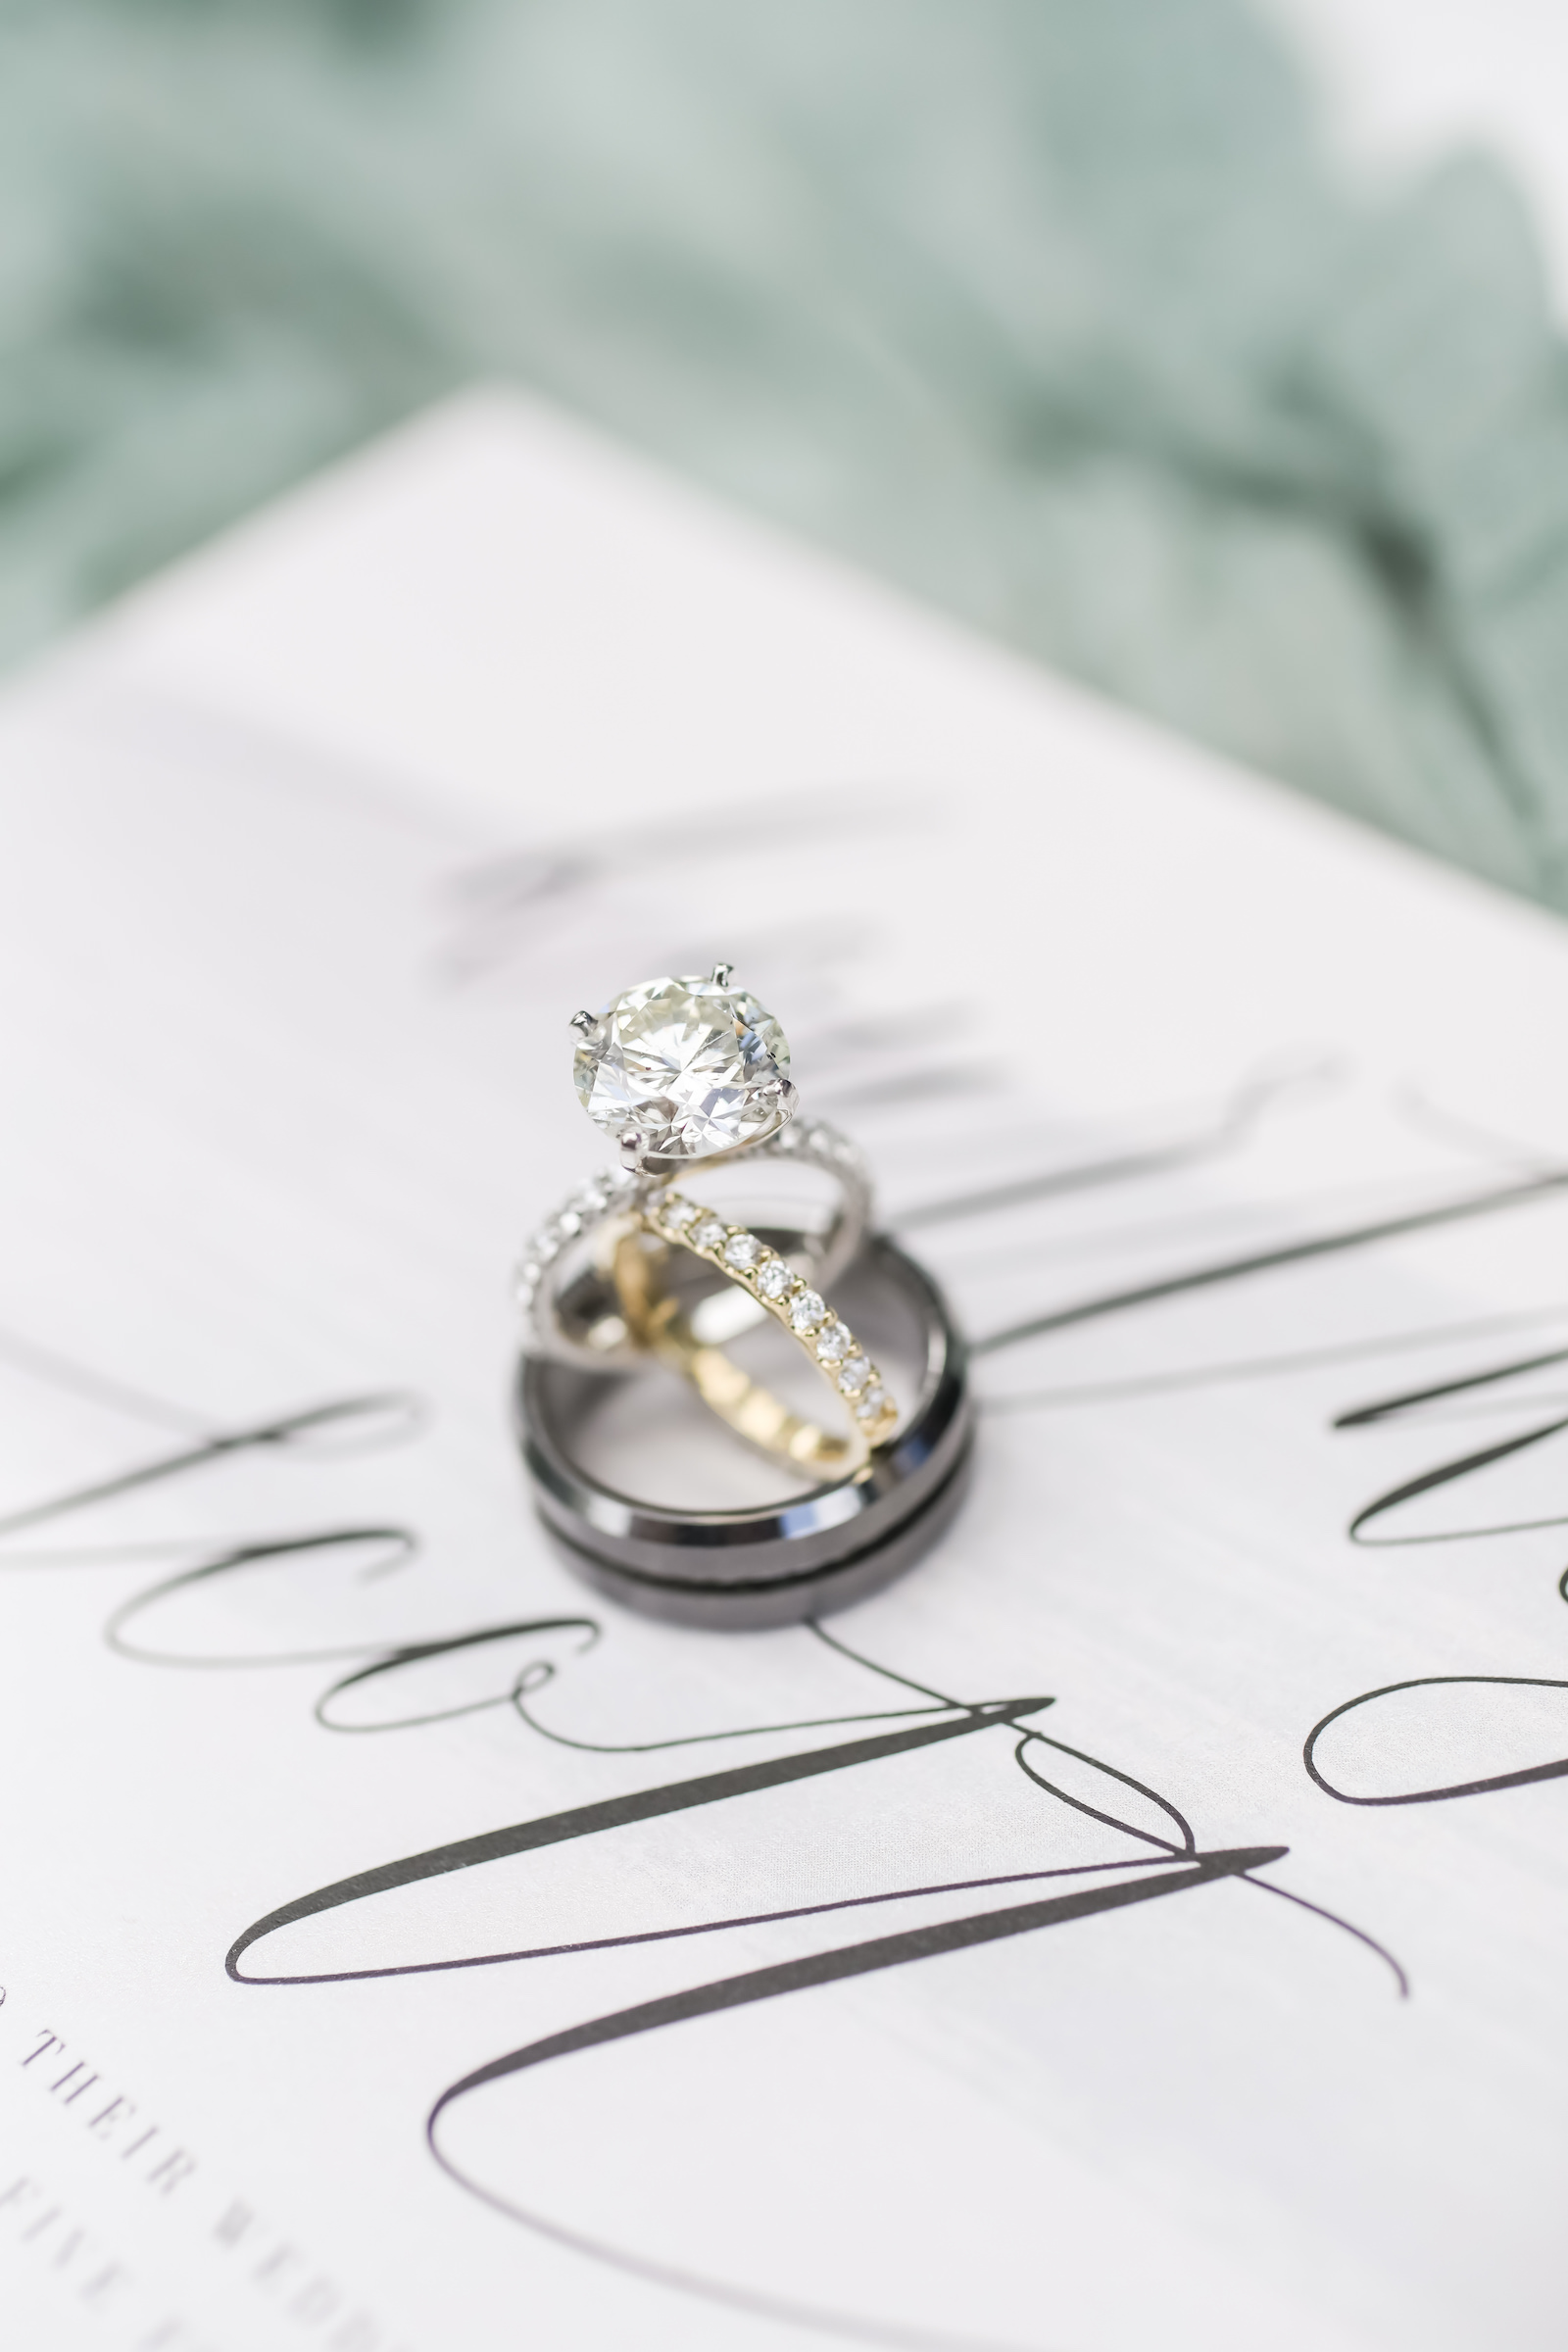 Luxurious Solitare Diamond Engagement Ring with Wedding Bands | Sarasota Wedding Planner Kelly Kennedy Weddings | Tampa Bay Wedding Photographer Lifelong Photography Studio